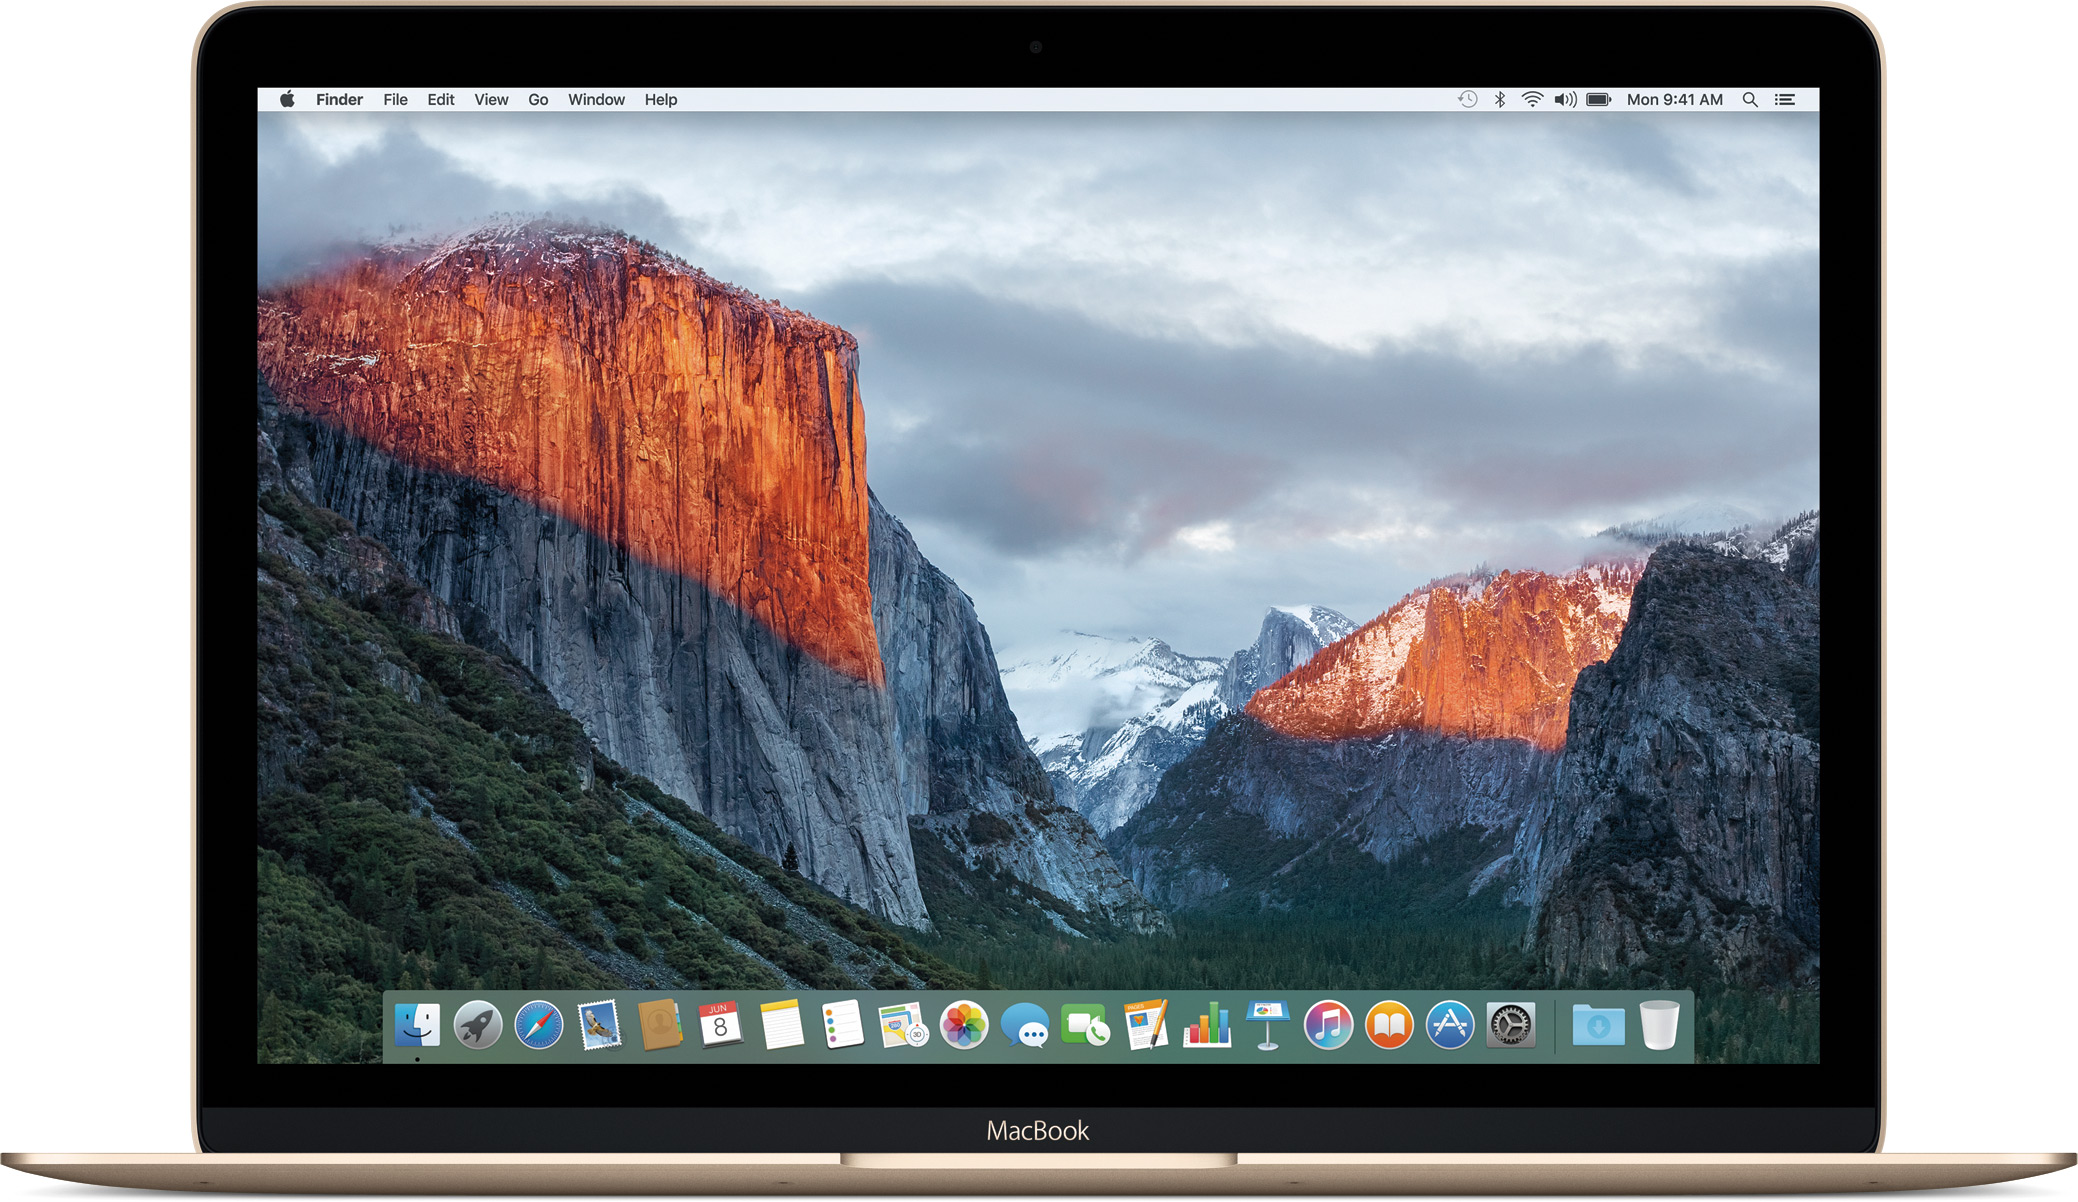 Mac os x 10.10 yosemite ver 2015 download 64-bit